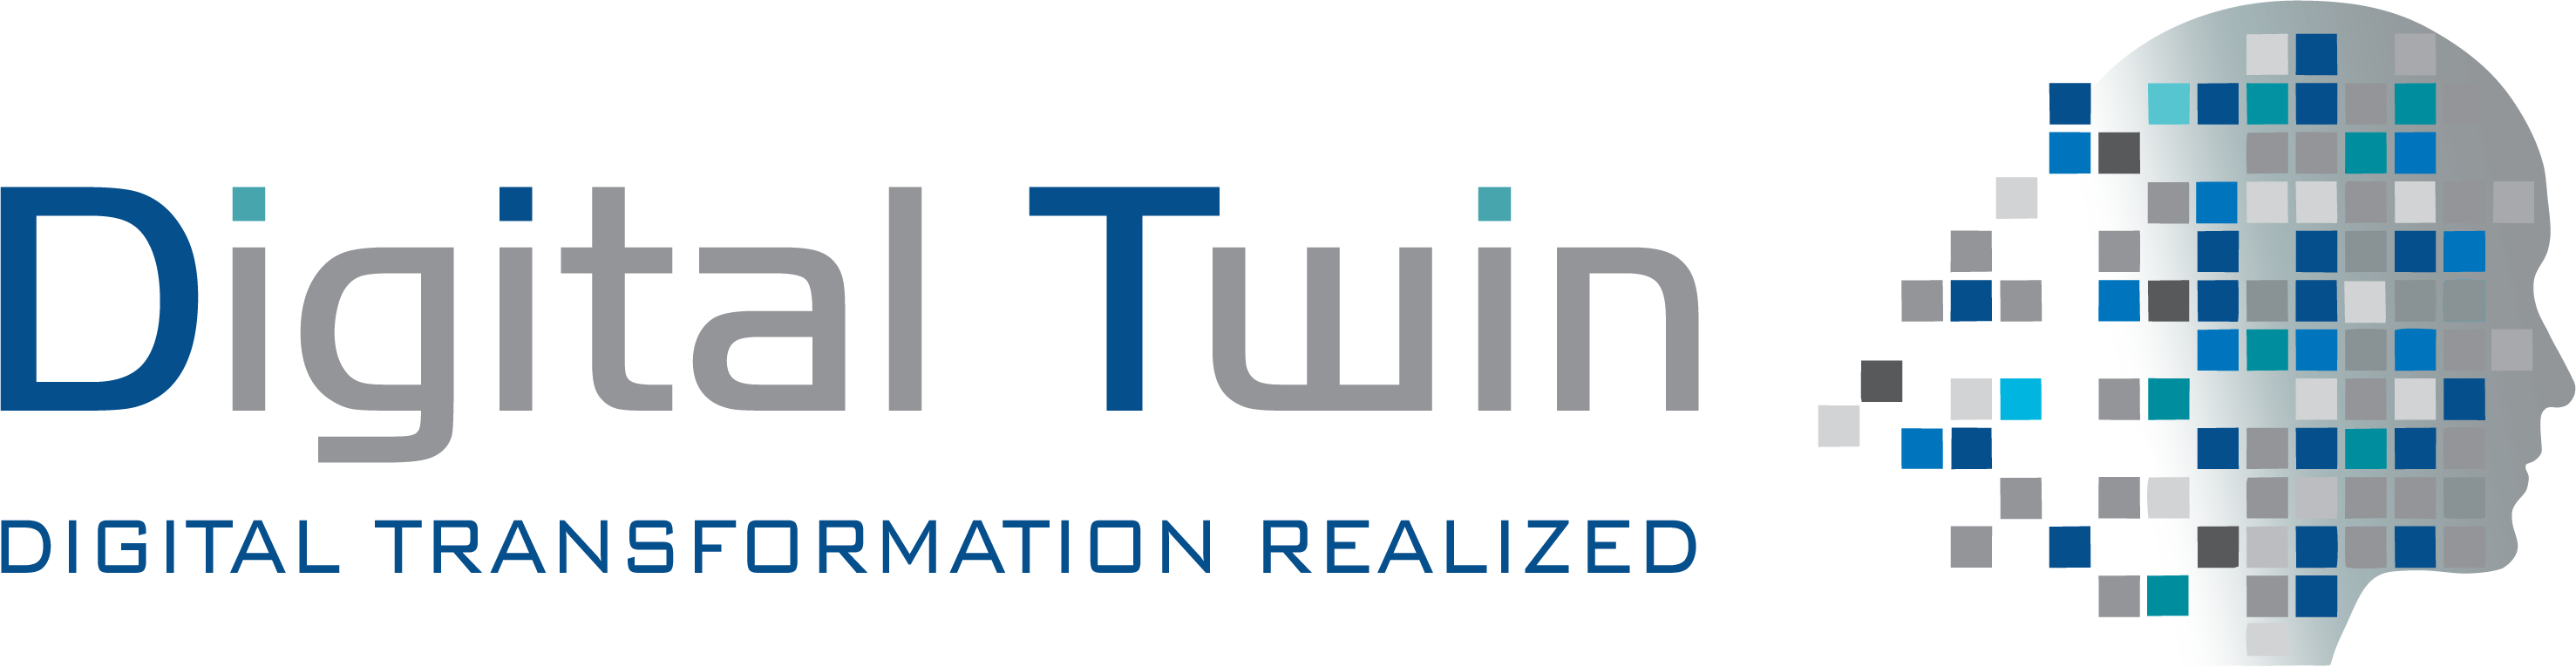 Digital Twin Logo